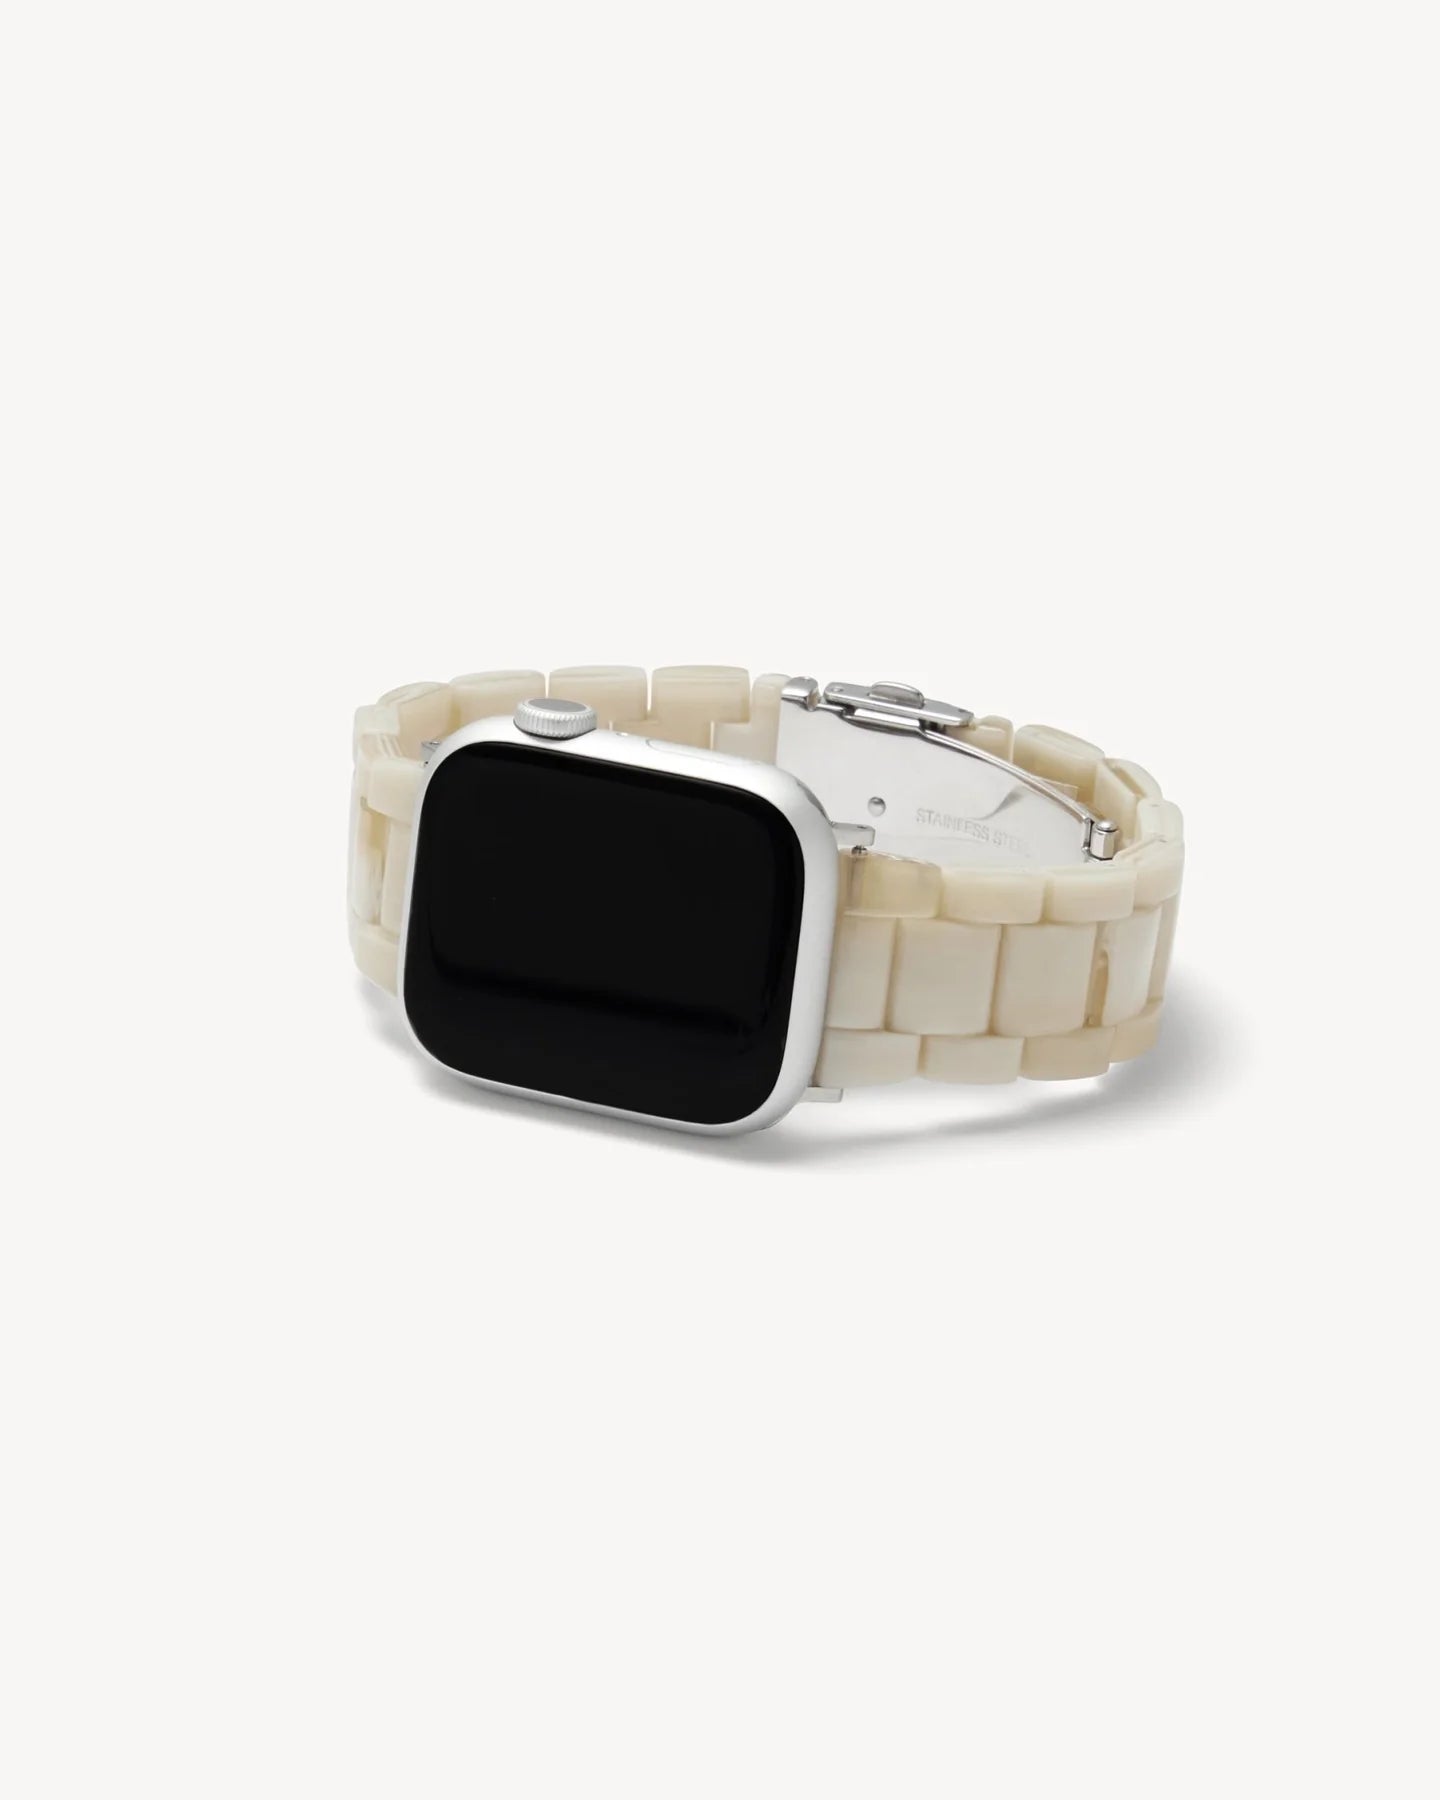 Apple Watch Band ~ Alabaster